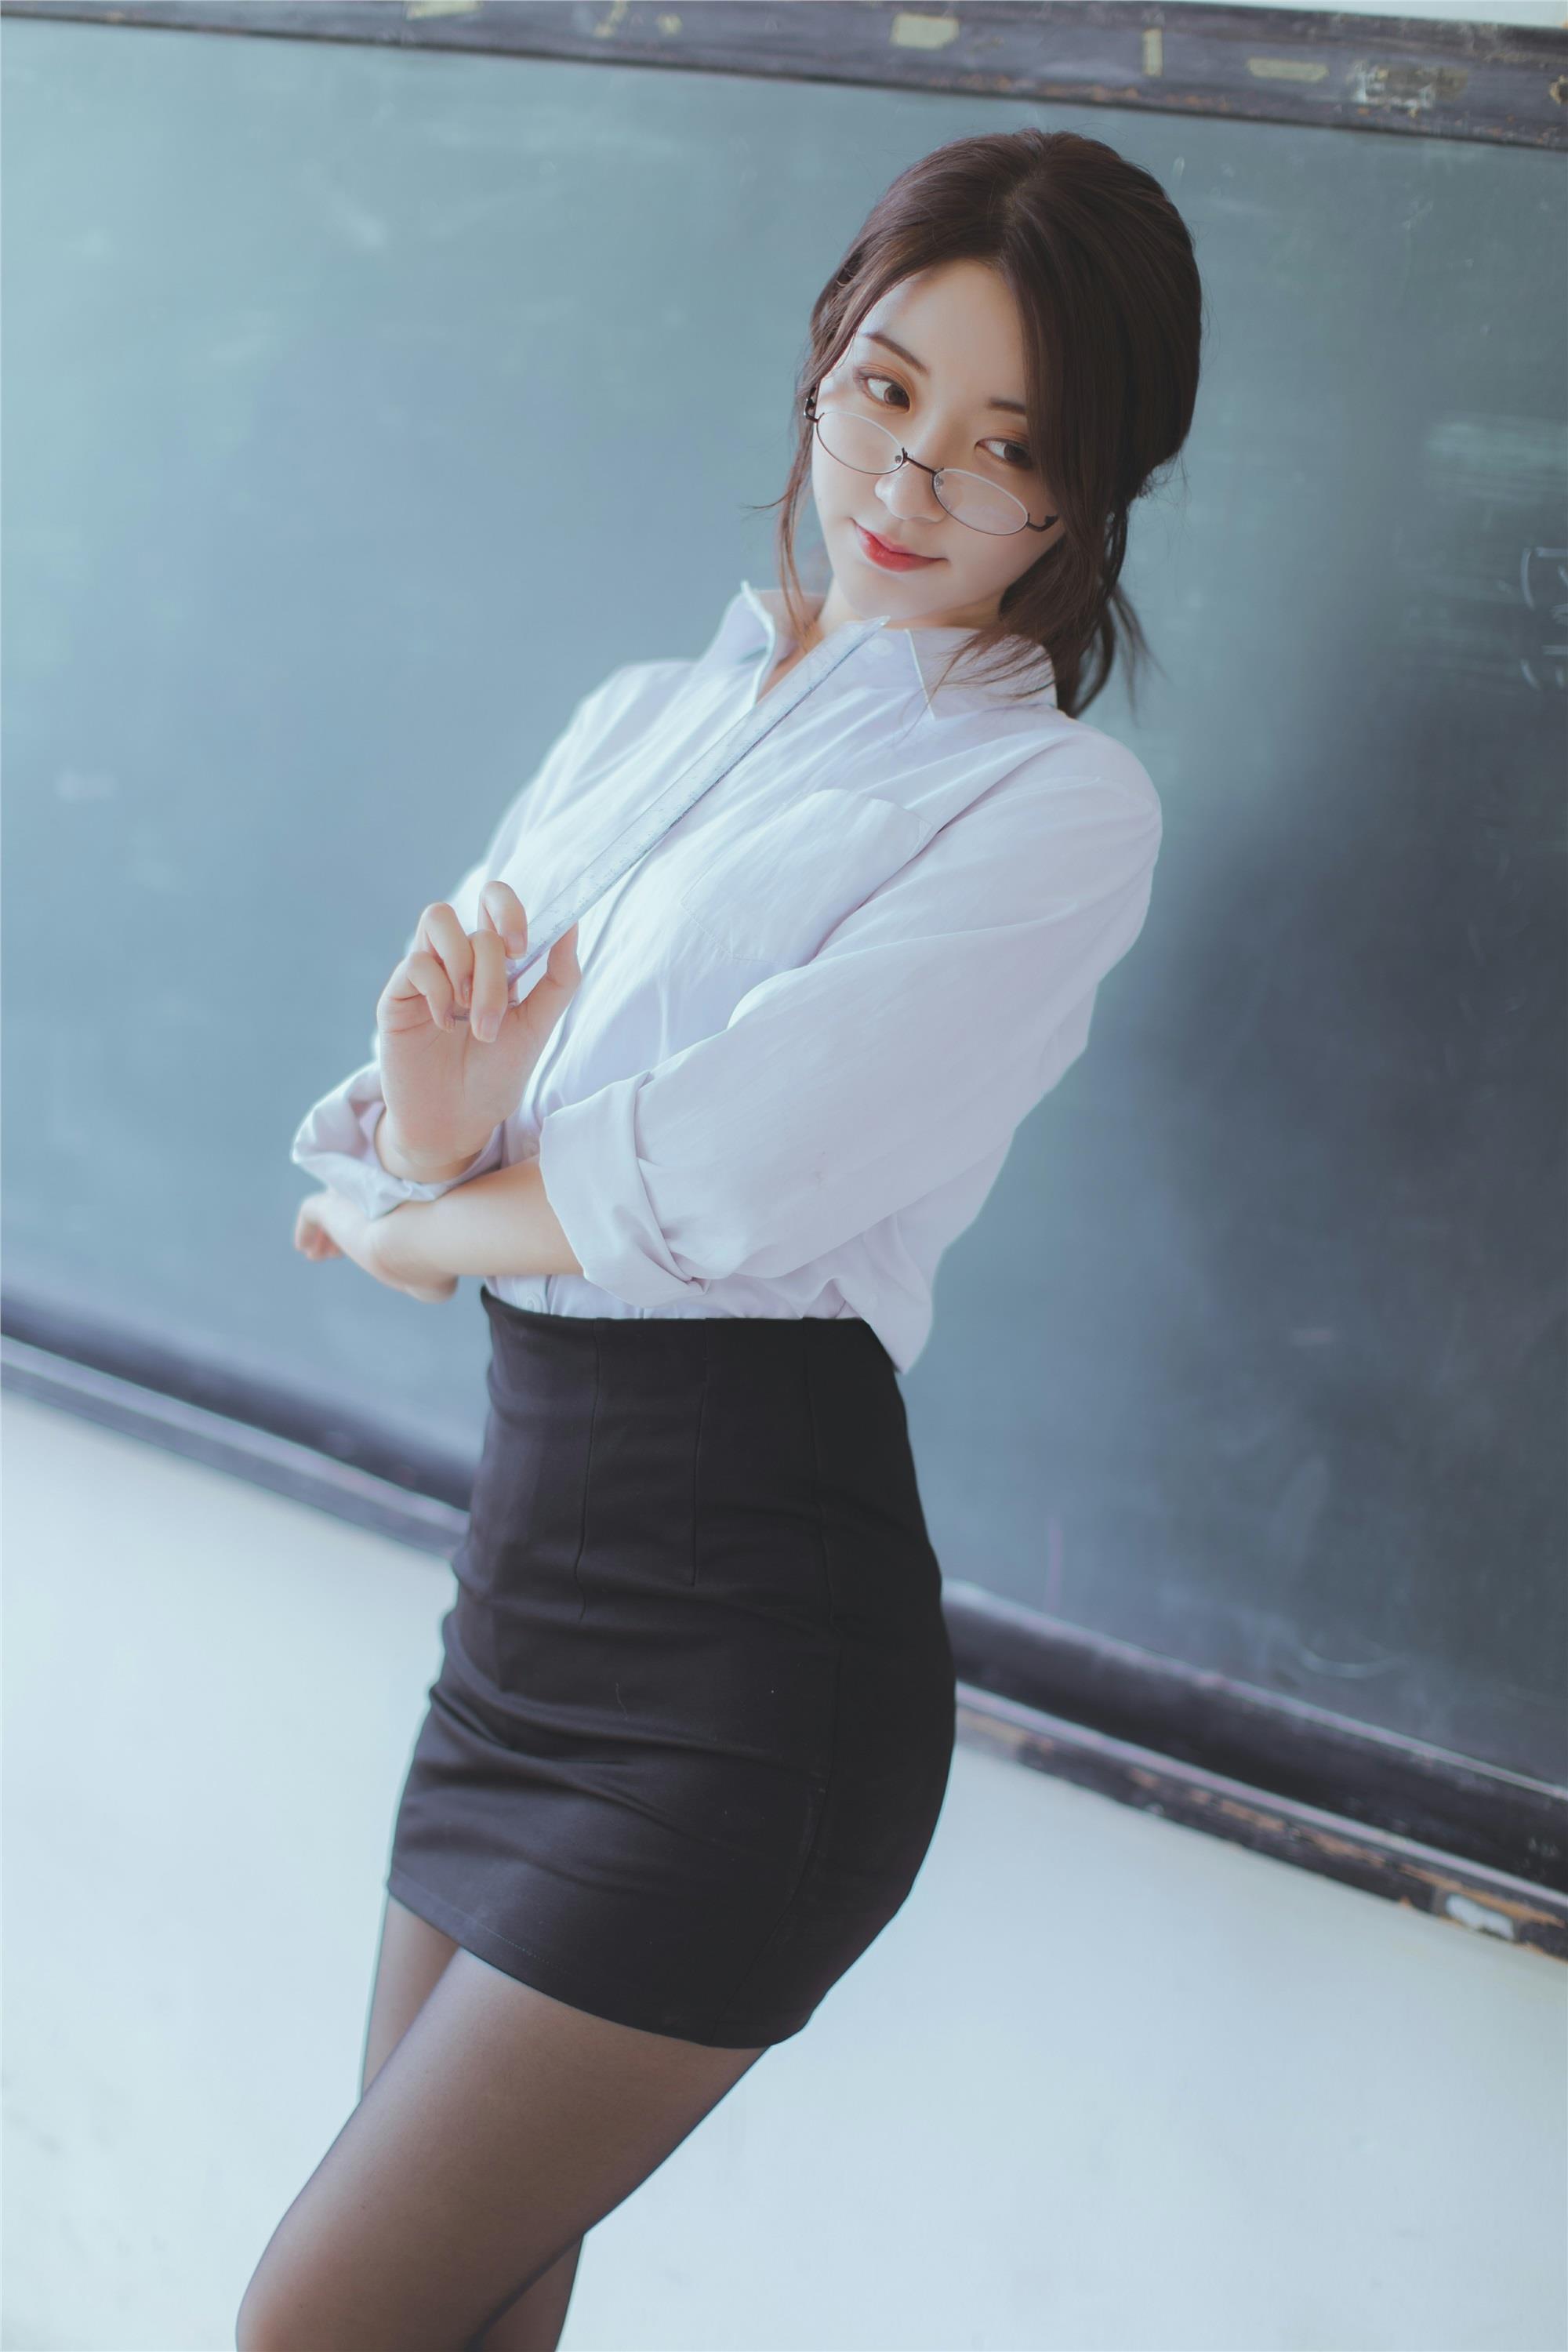 Cosplay Girl - Teacher - 84.jpg